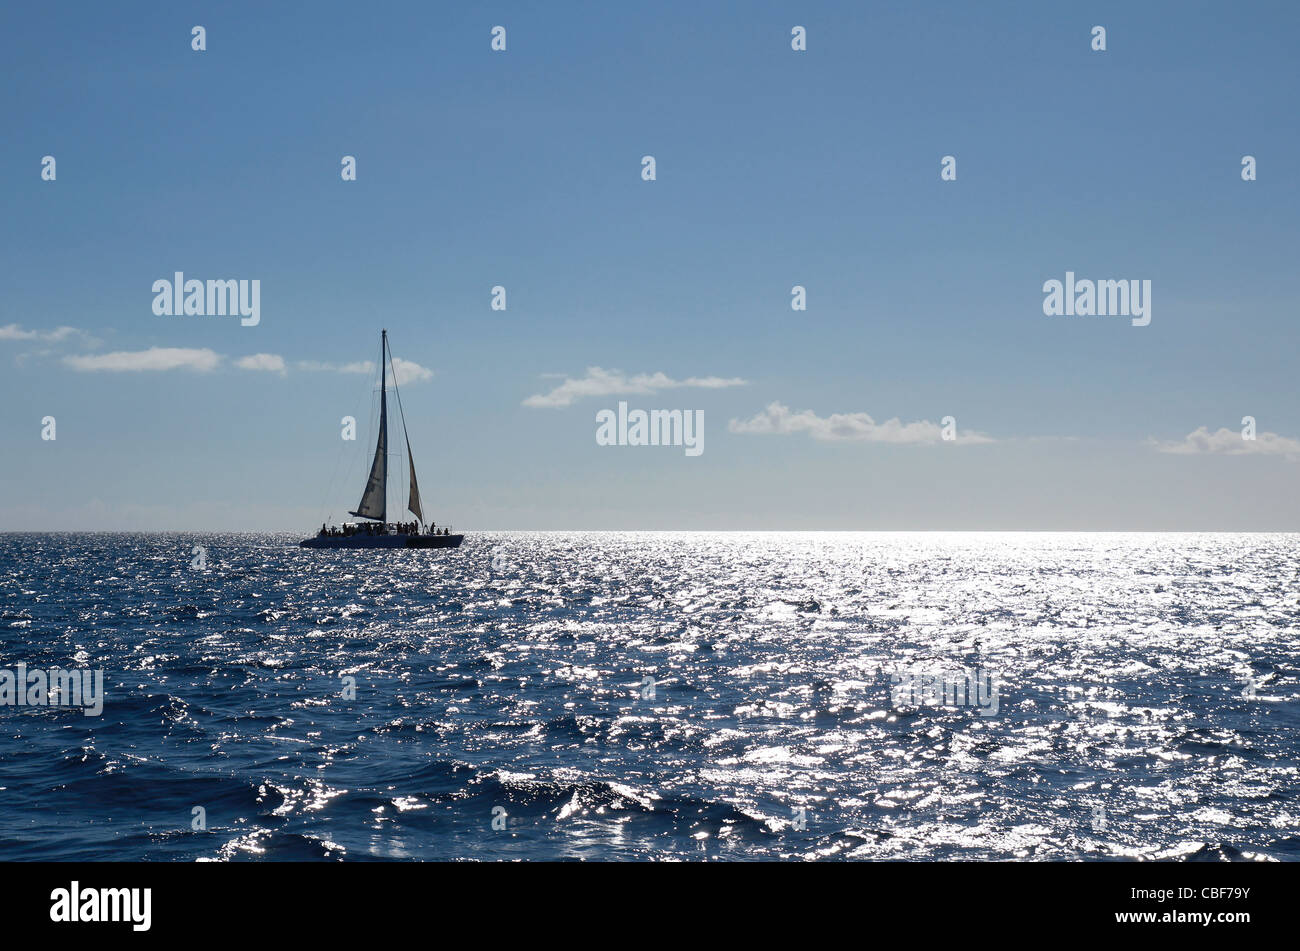 Sailing yacht in caribbean sea Stock Photo